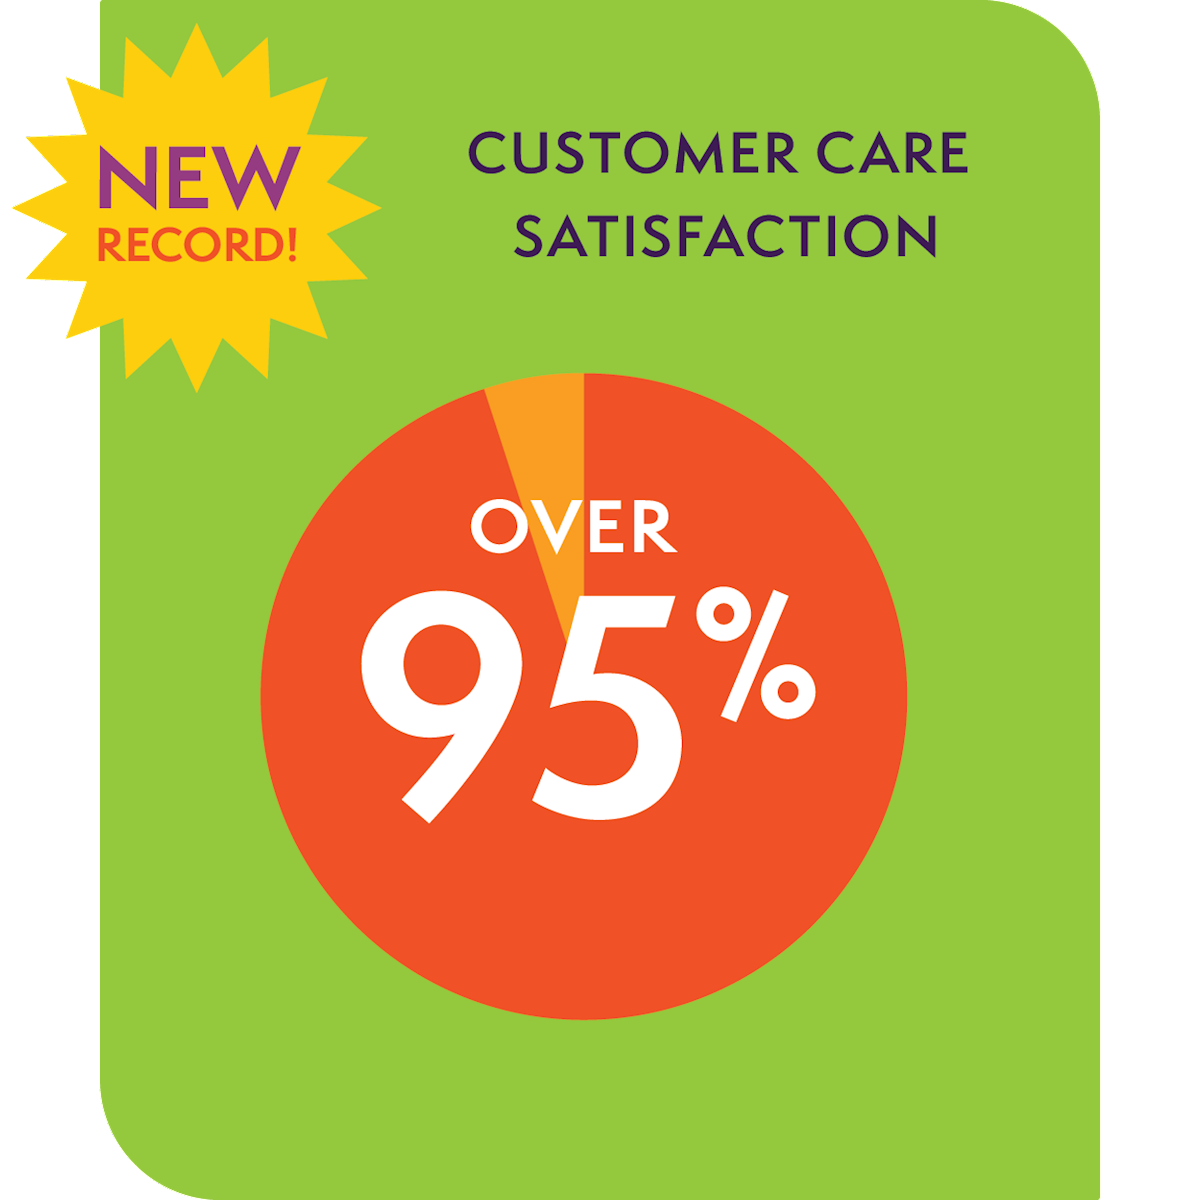 Customer Care Satisfaction 95%